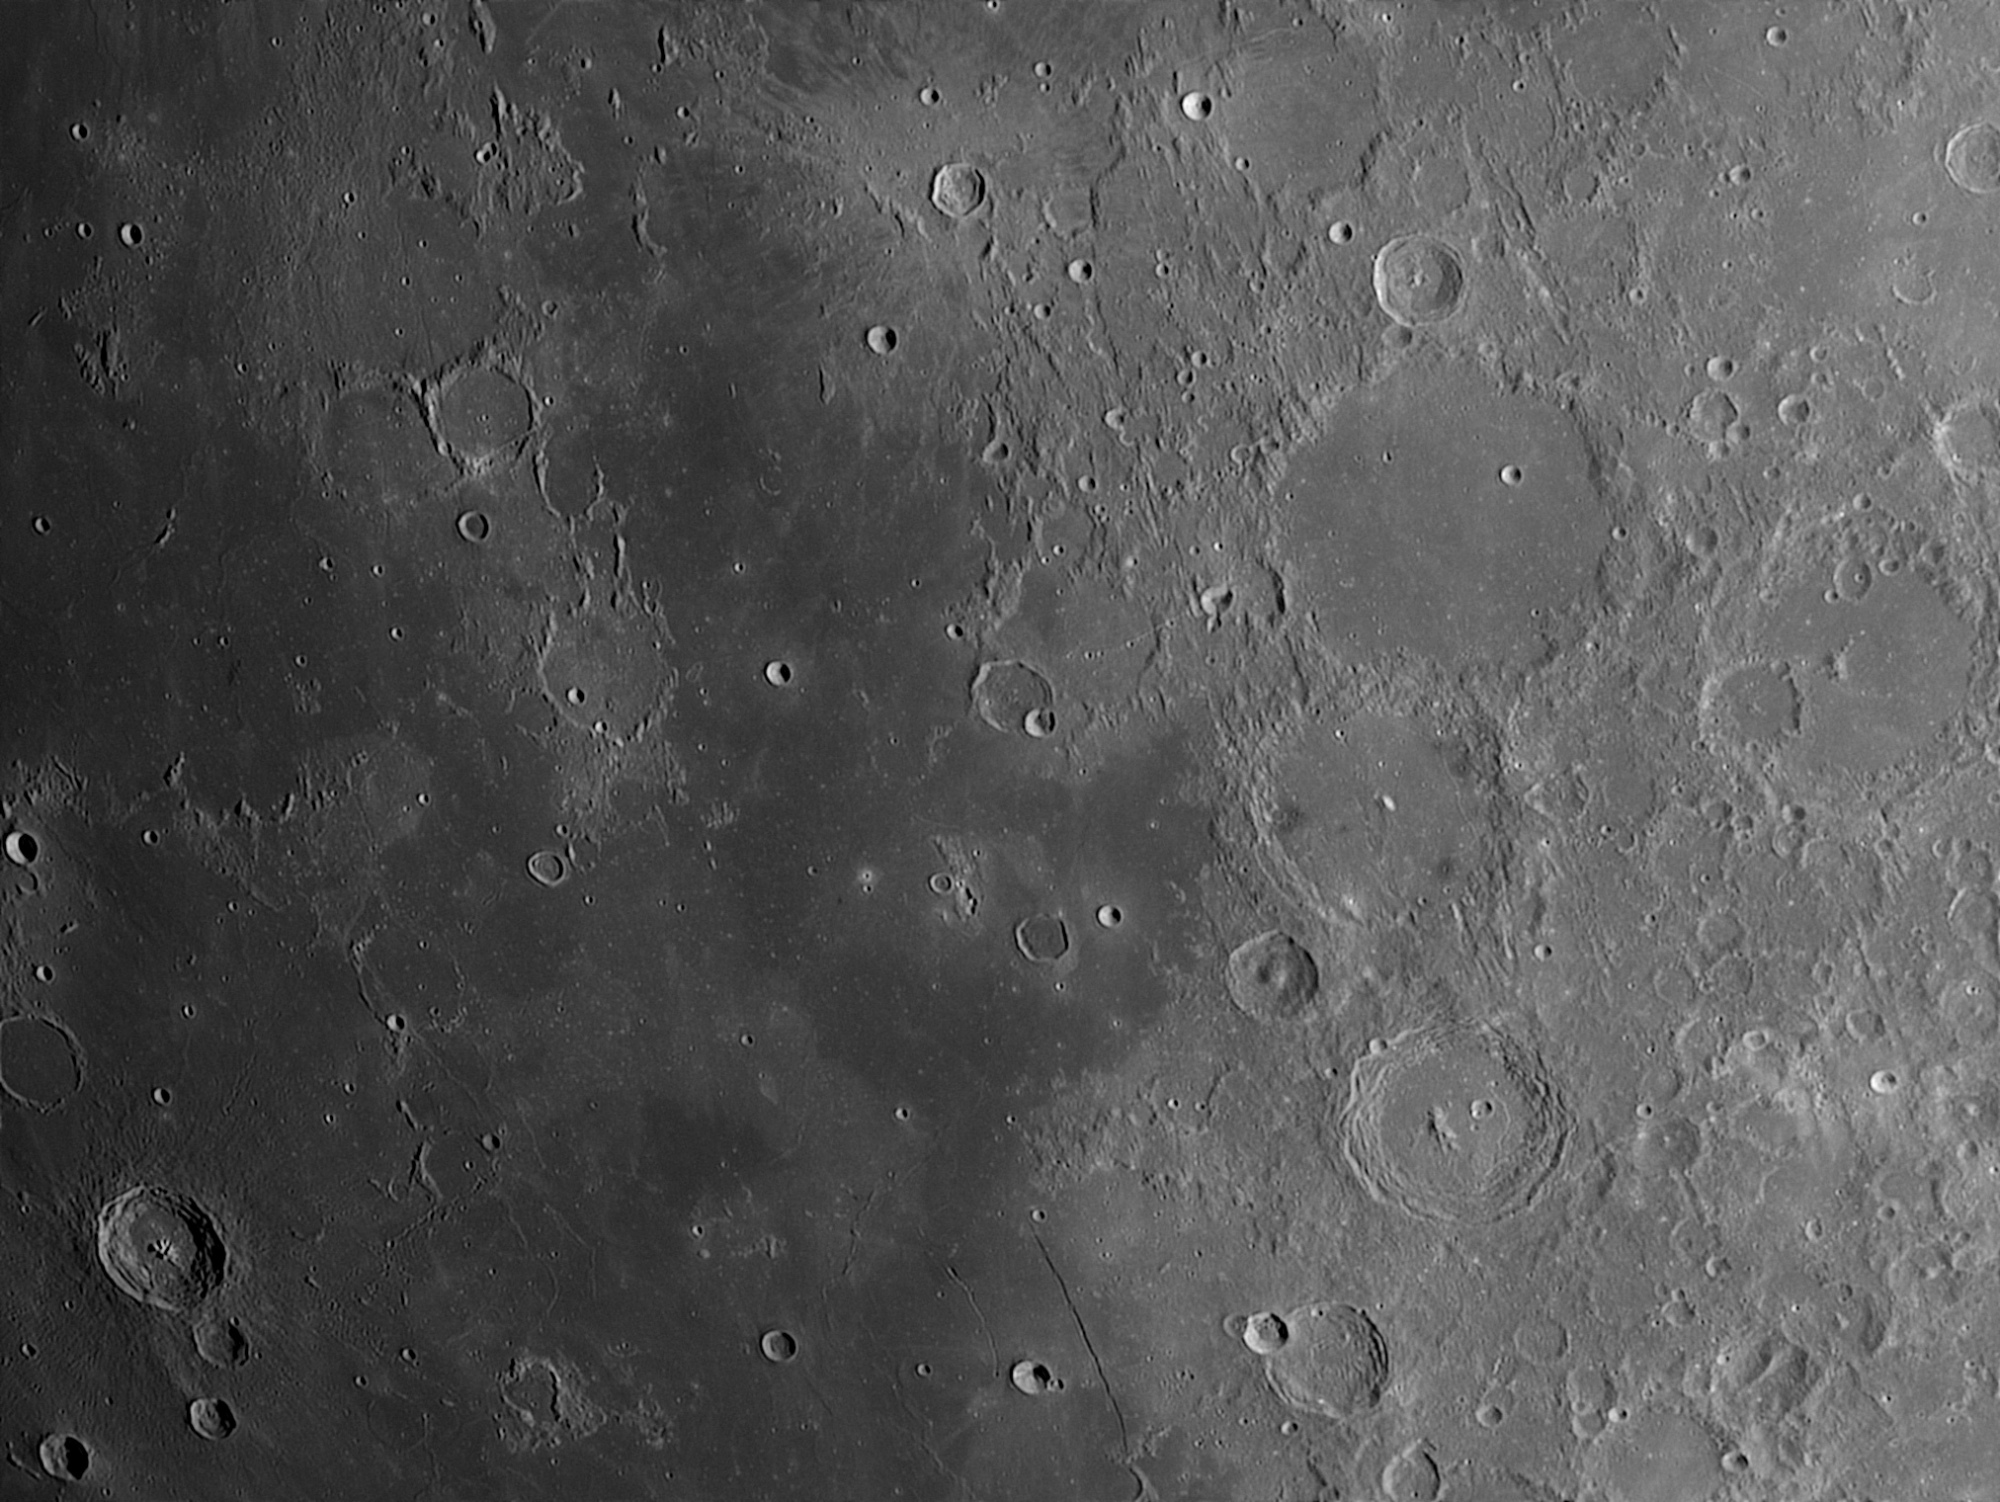 Lune-20201125_PAA-ba-AS2.thumb.jpg.3ee9becfdf0dcec2a08b75c3648a3f5e.jpg